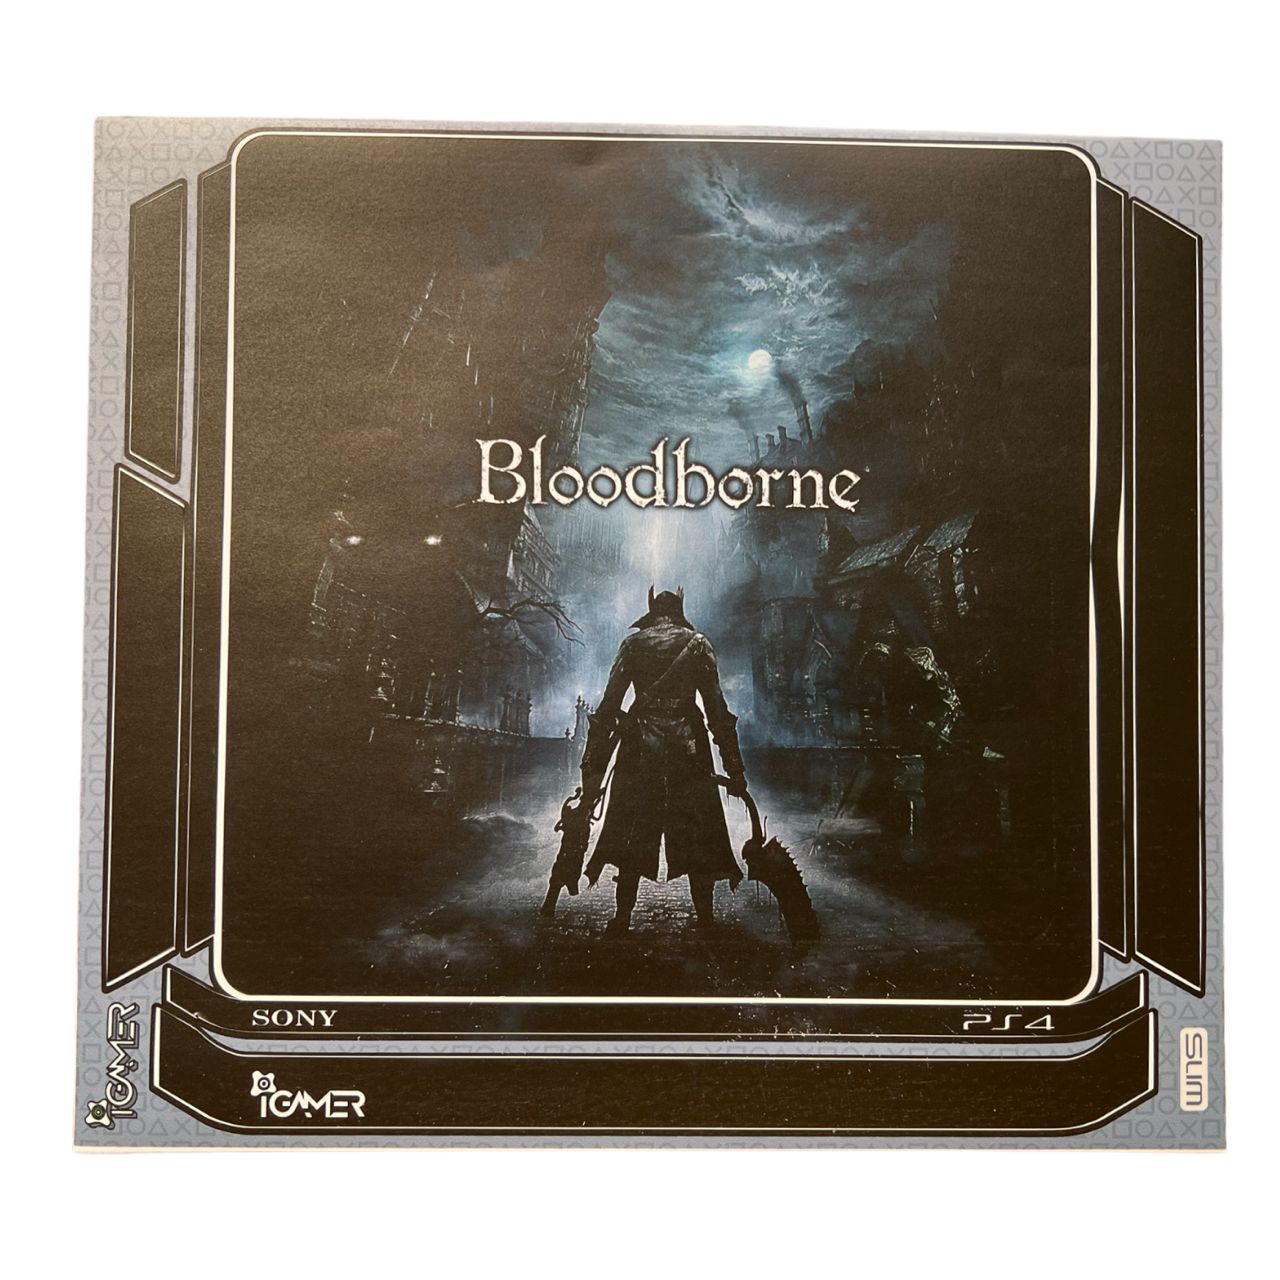 اسکین مخصوص Playstation4 Slim طرح Bloodborne